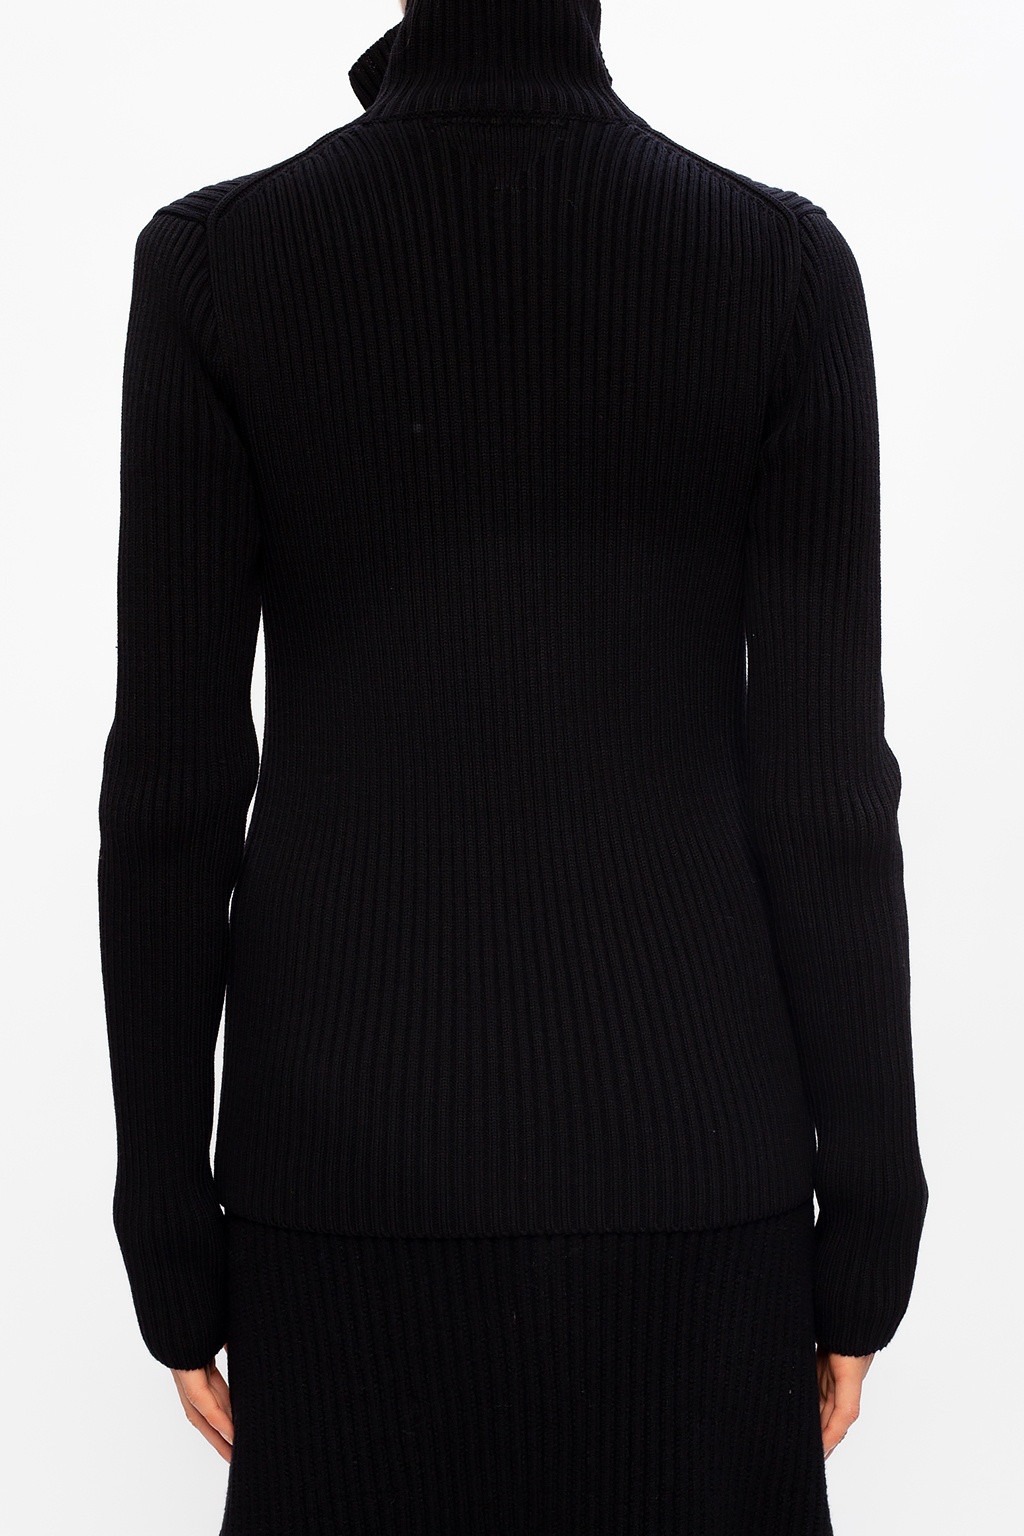 Louis Vuitton Felted Wool High Neck Knit Mini Dress - Vitkac shop online